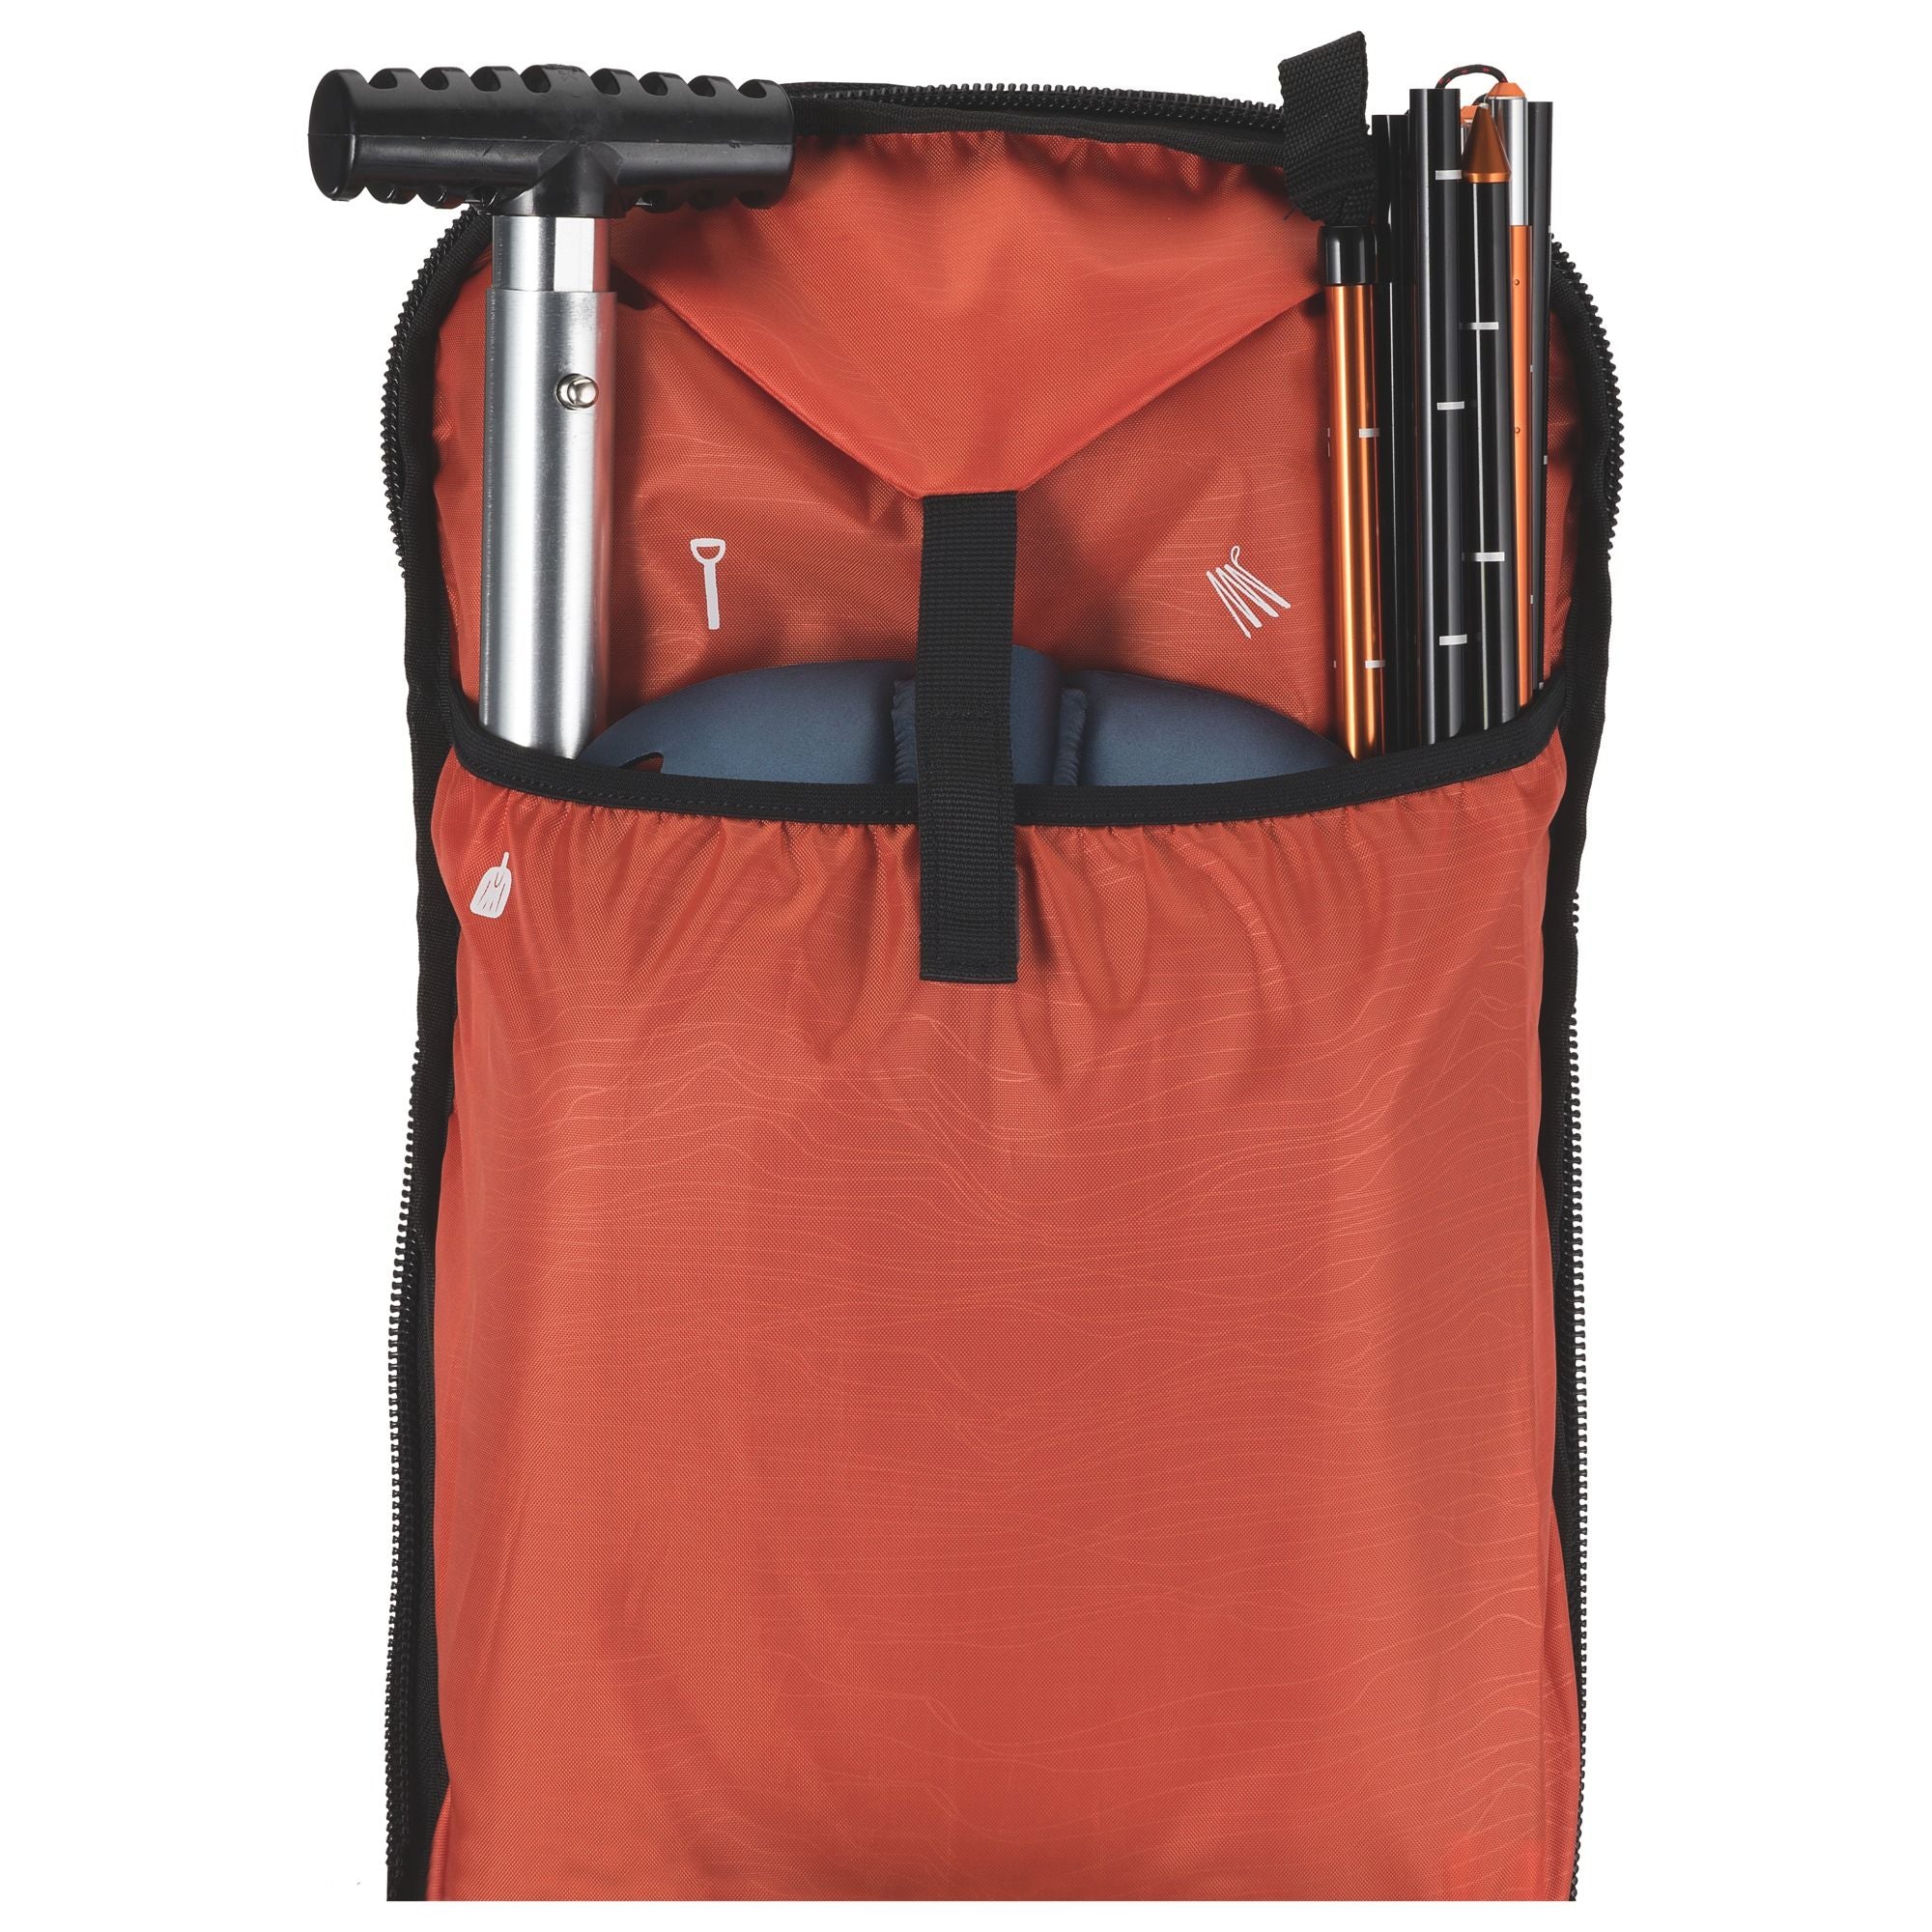 Scott Patrol E1 40L Backpack Kit